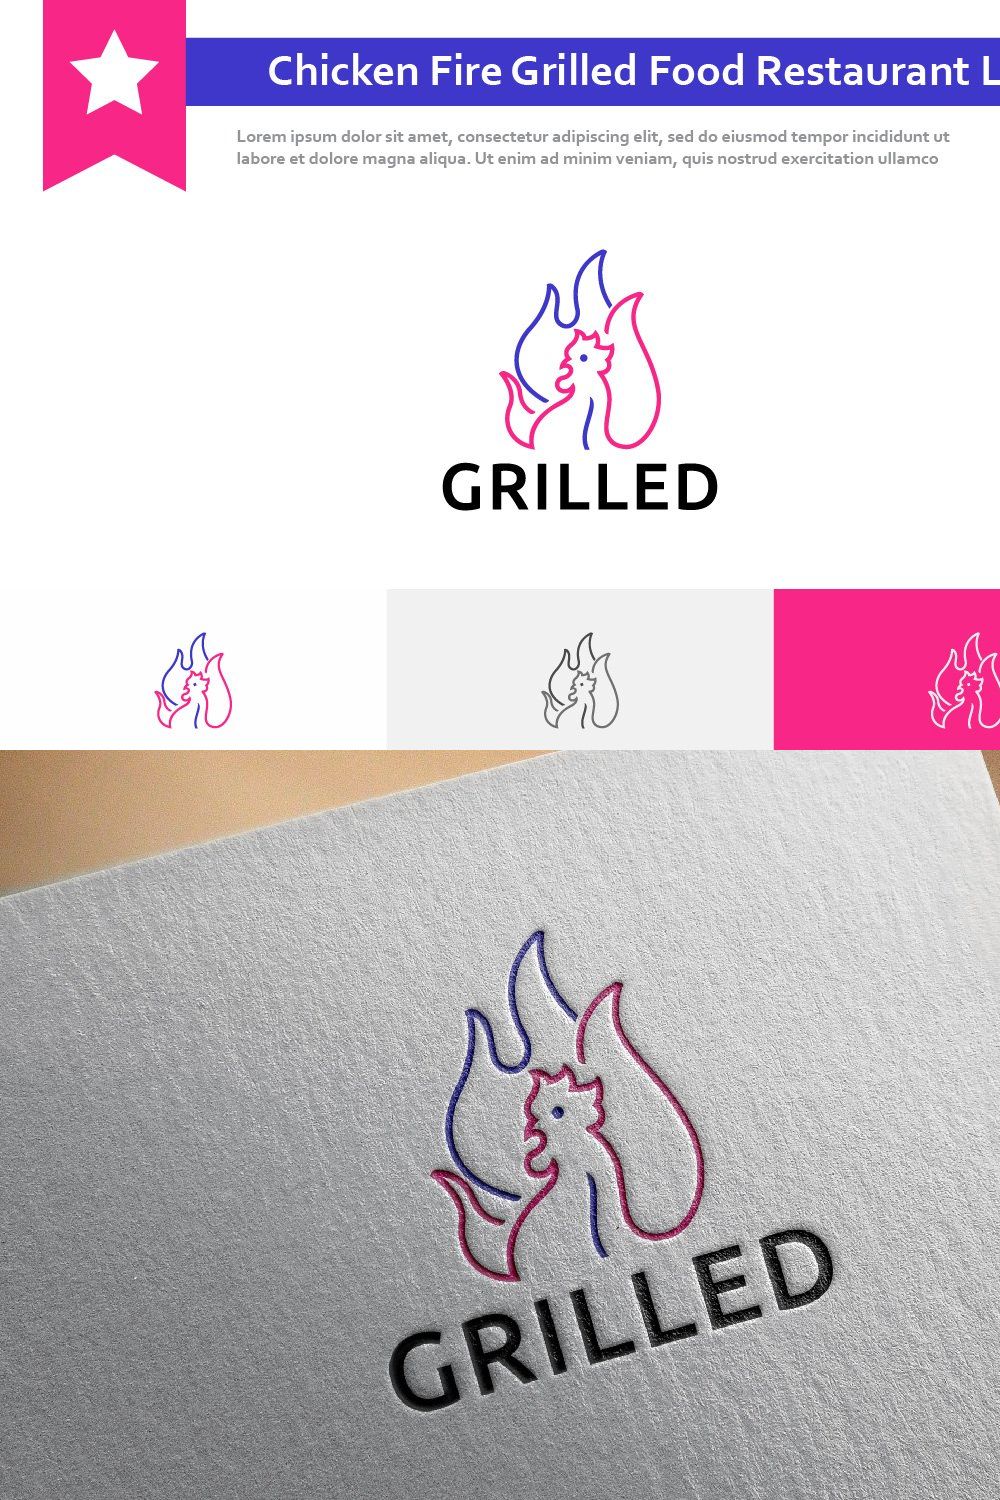 Chicken Fire Grilled Restaurant Logo pinterest preview image.